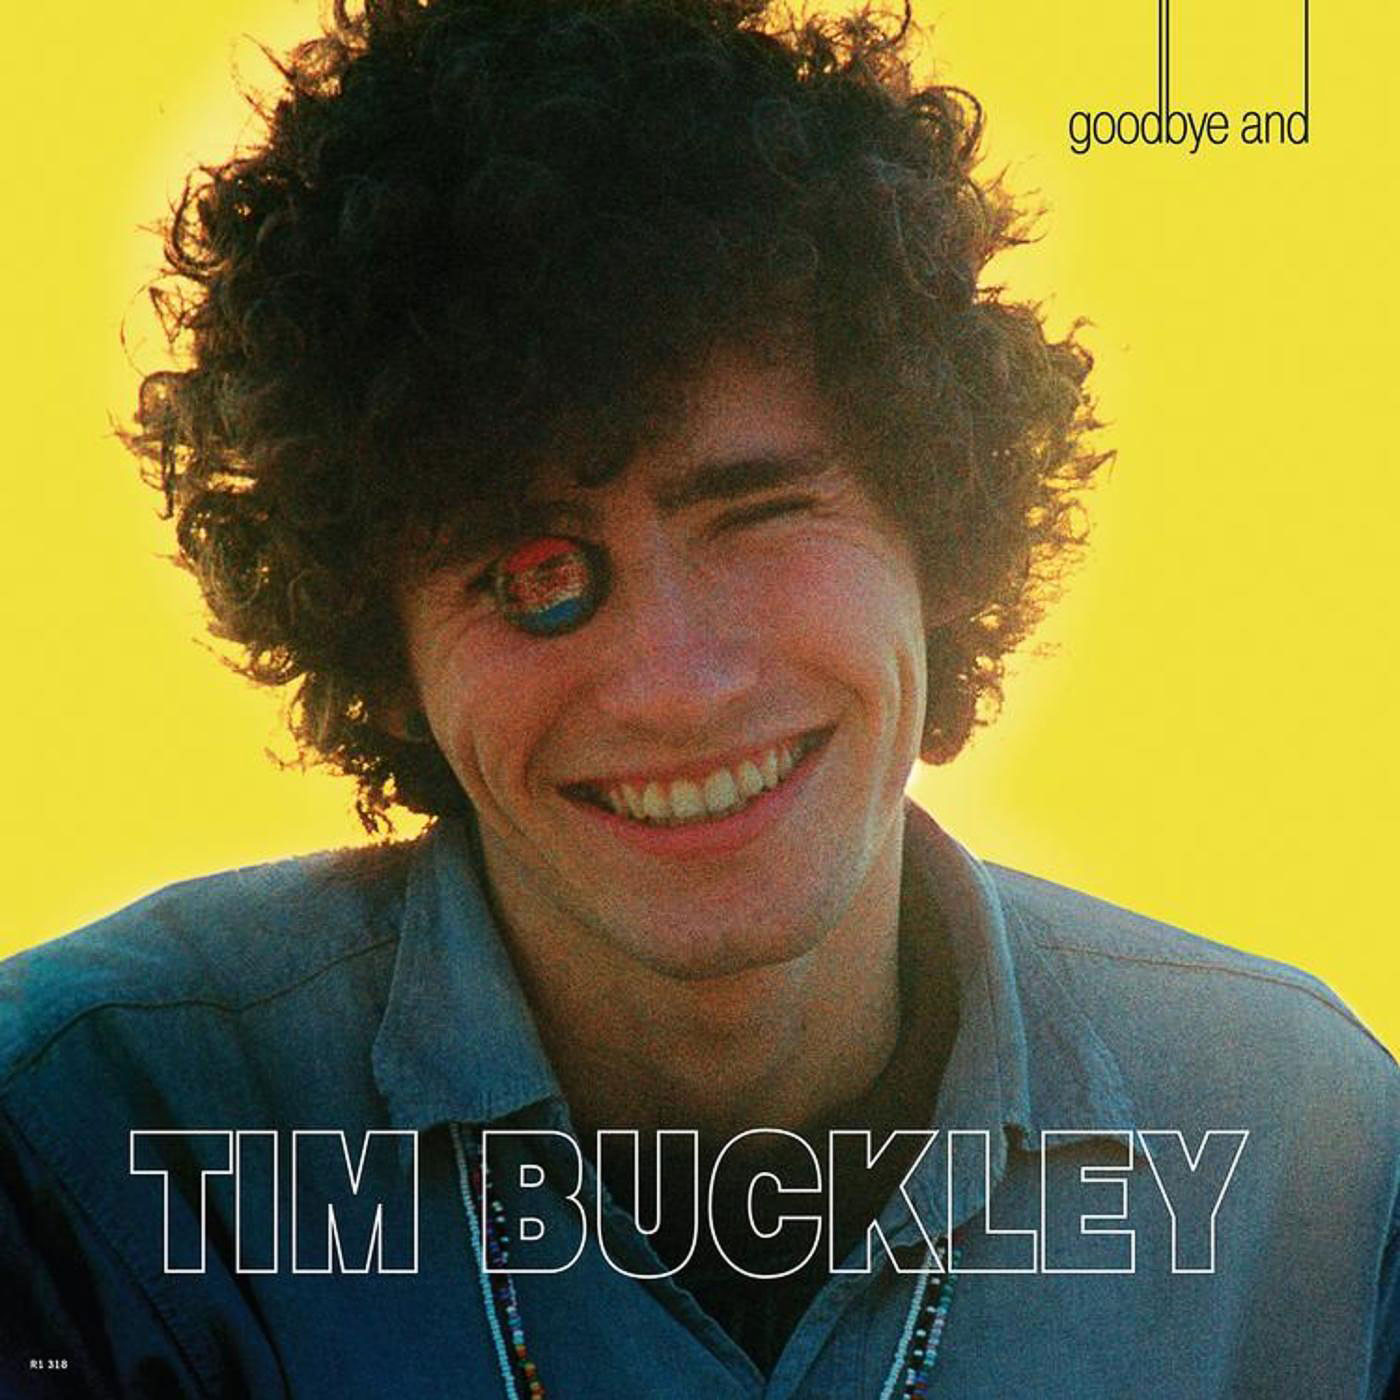 086 Tim Buckley – Goodbye and Hello